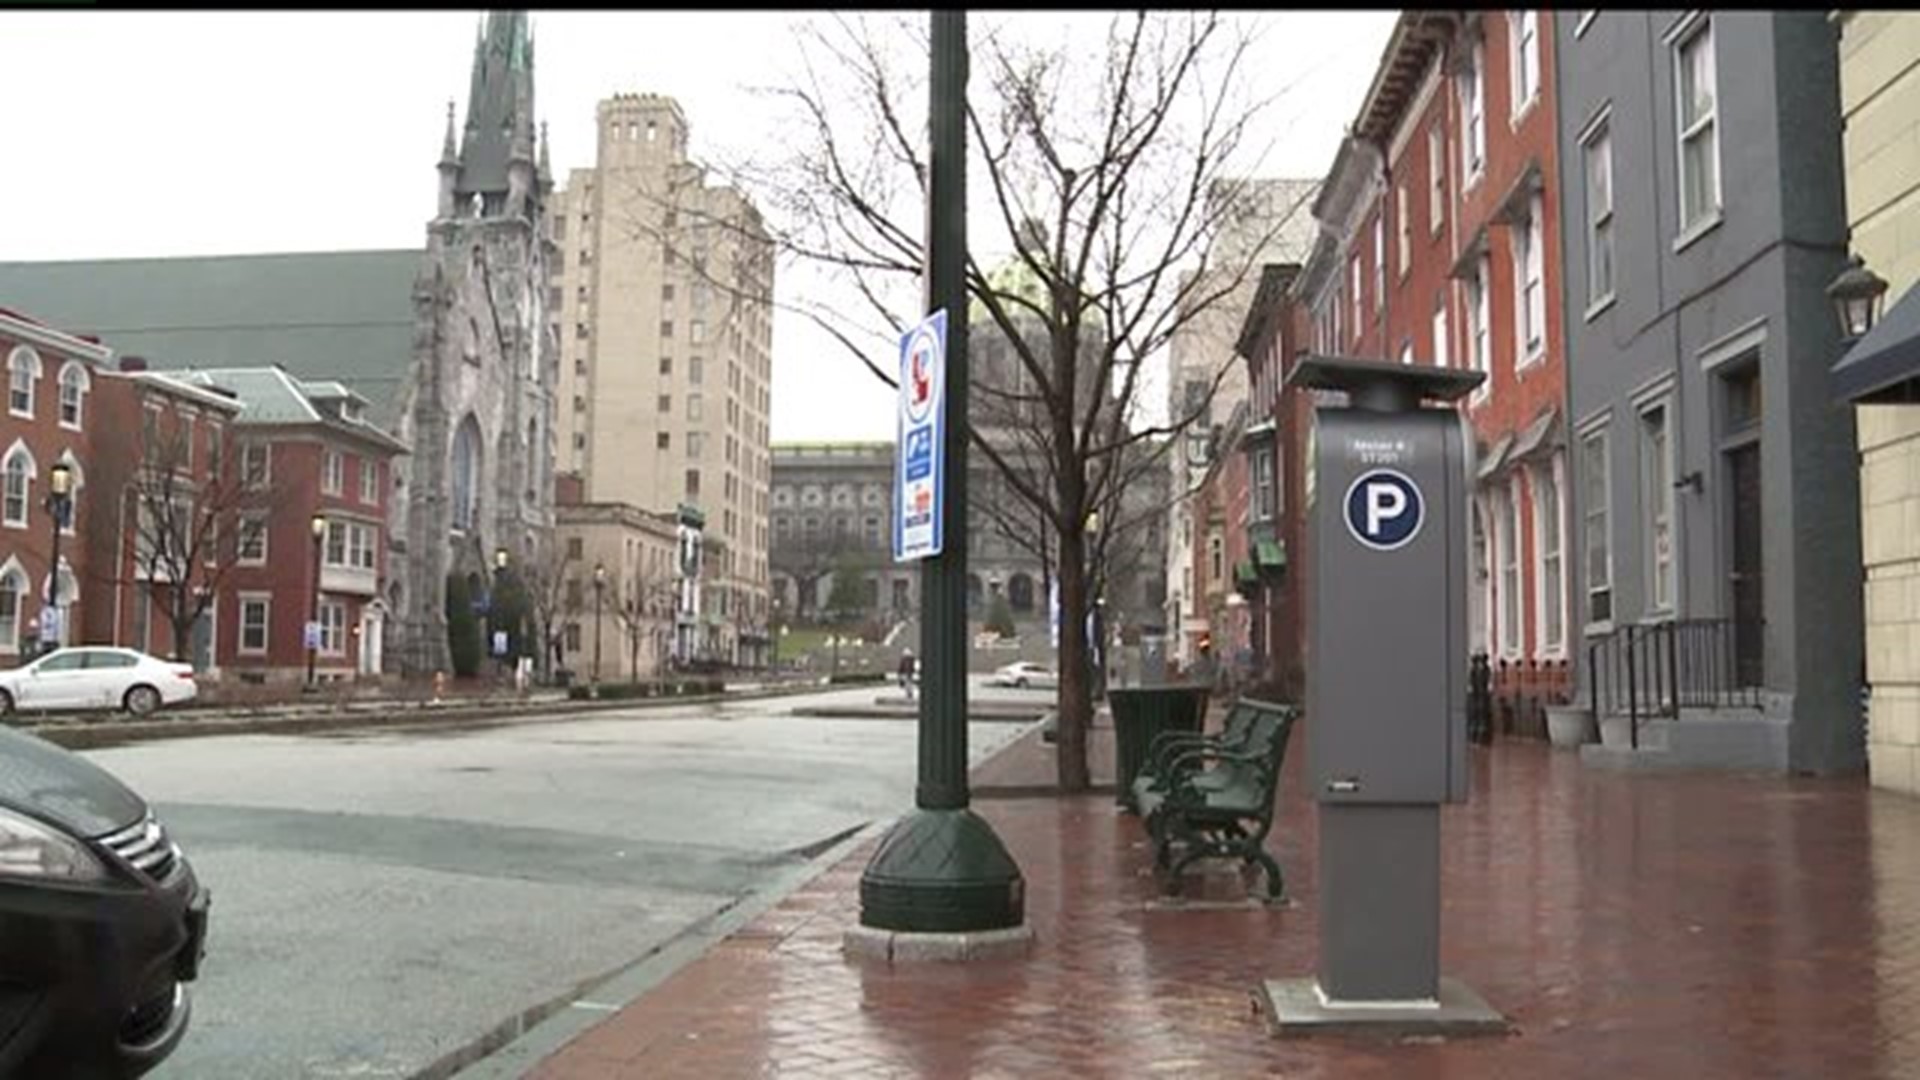 Harrisburg parking meters on Christmas Eve downtown